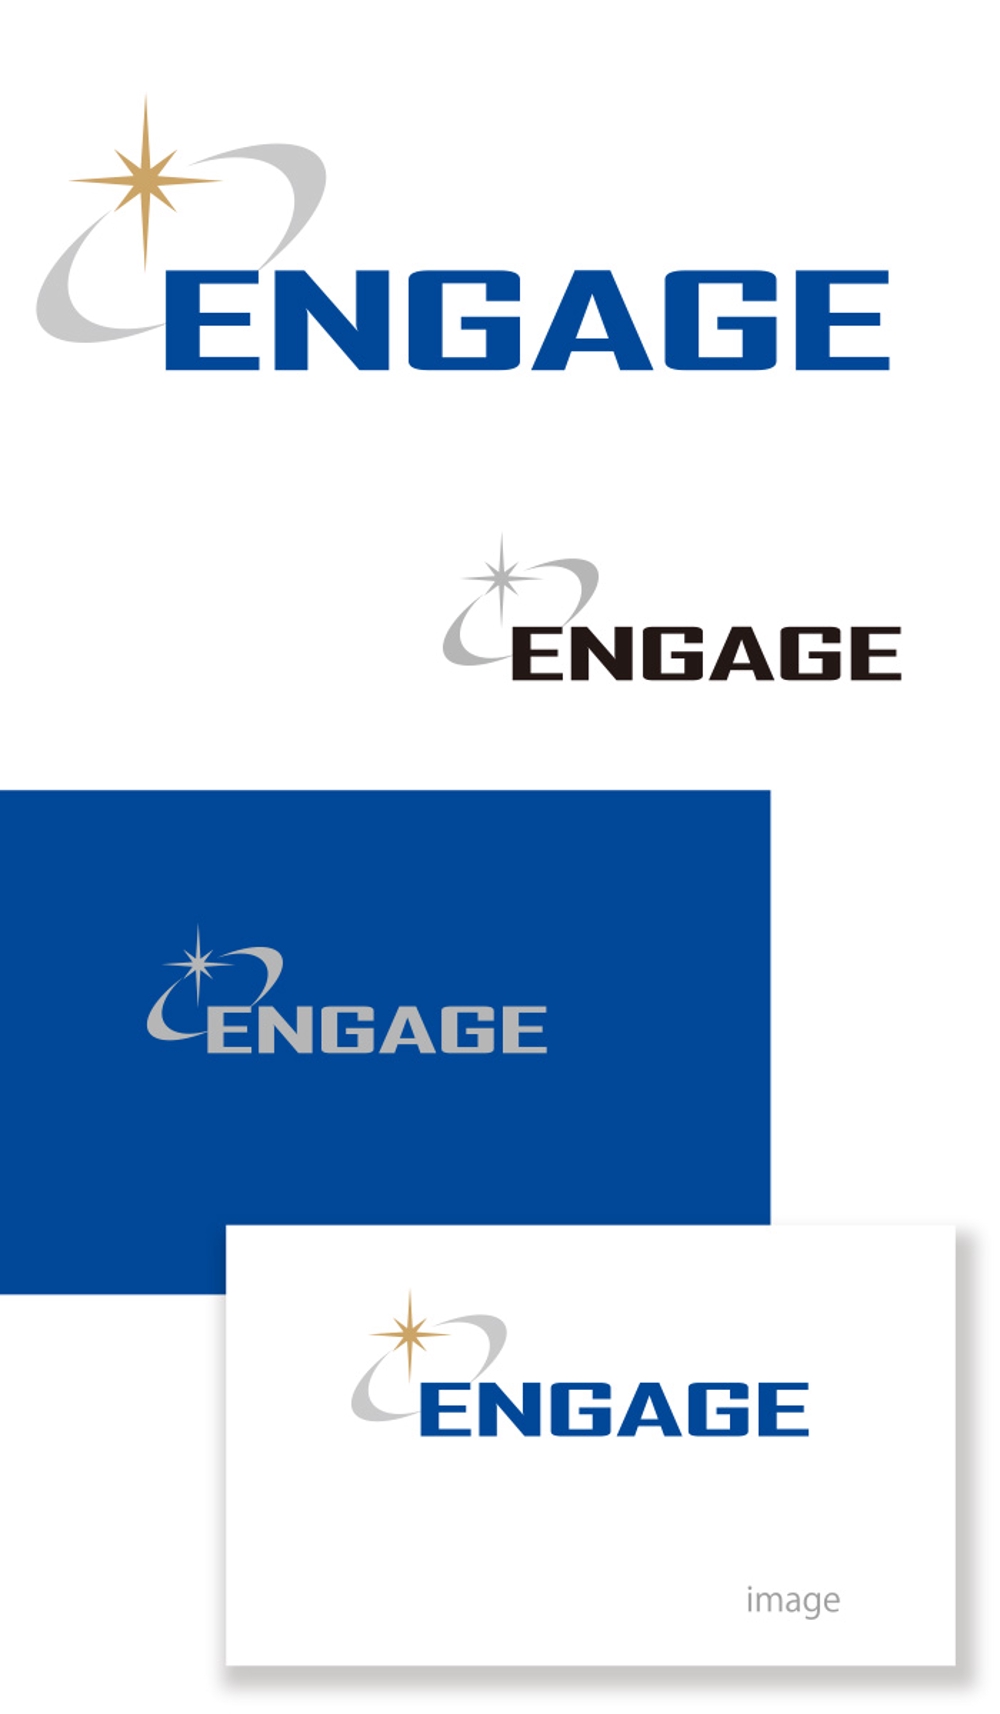 ENGAGE logo_serve.jpg